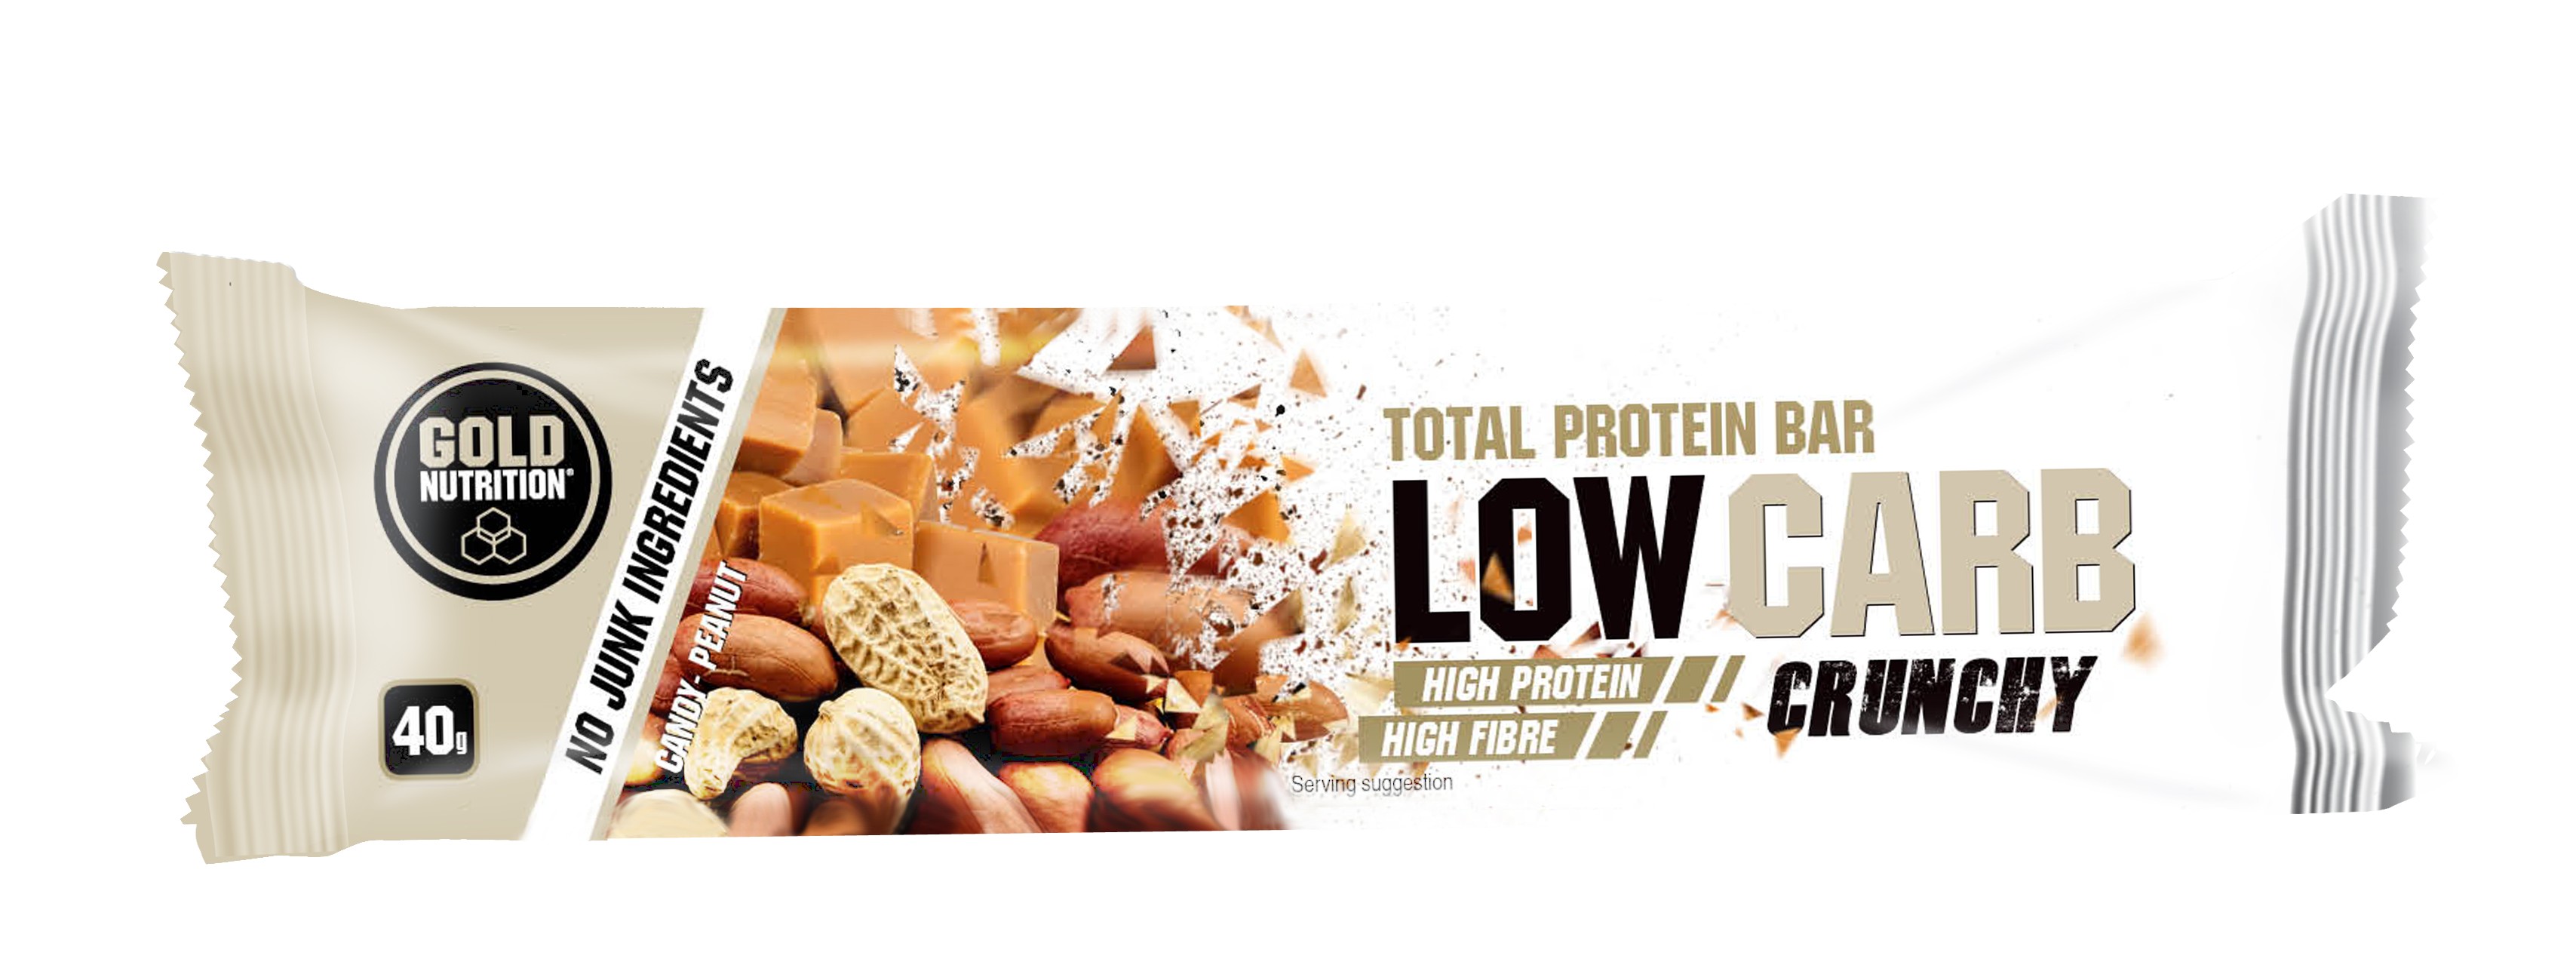 Batoane Proteice, Low Carb, Crunchy, Caramel si Alune, 40 g, Gold Nutrition